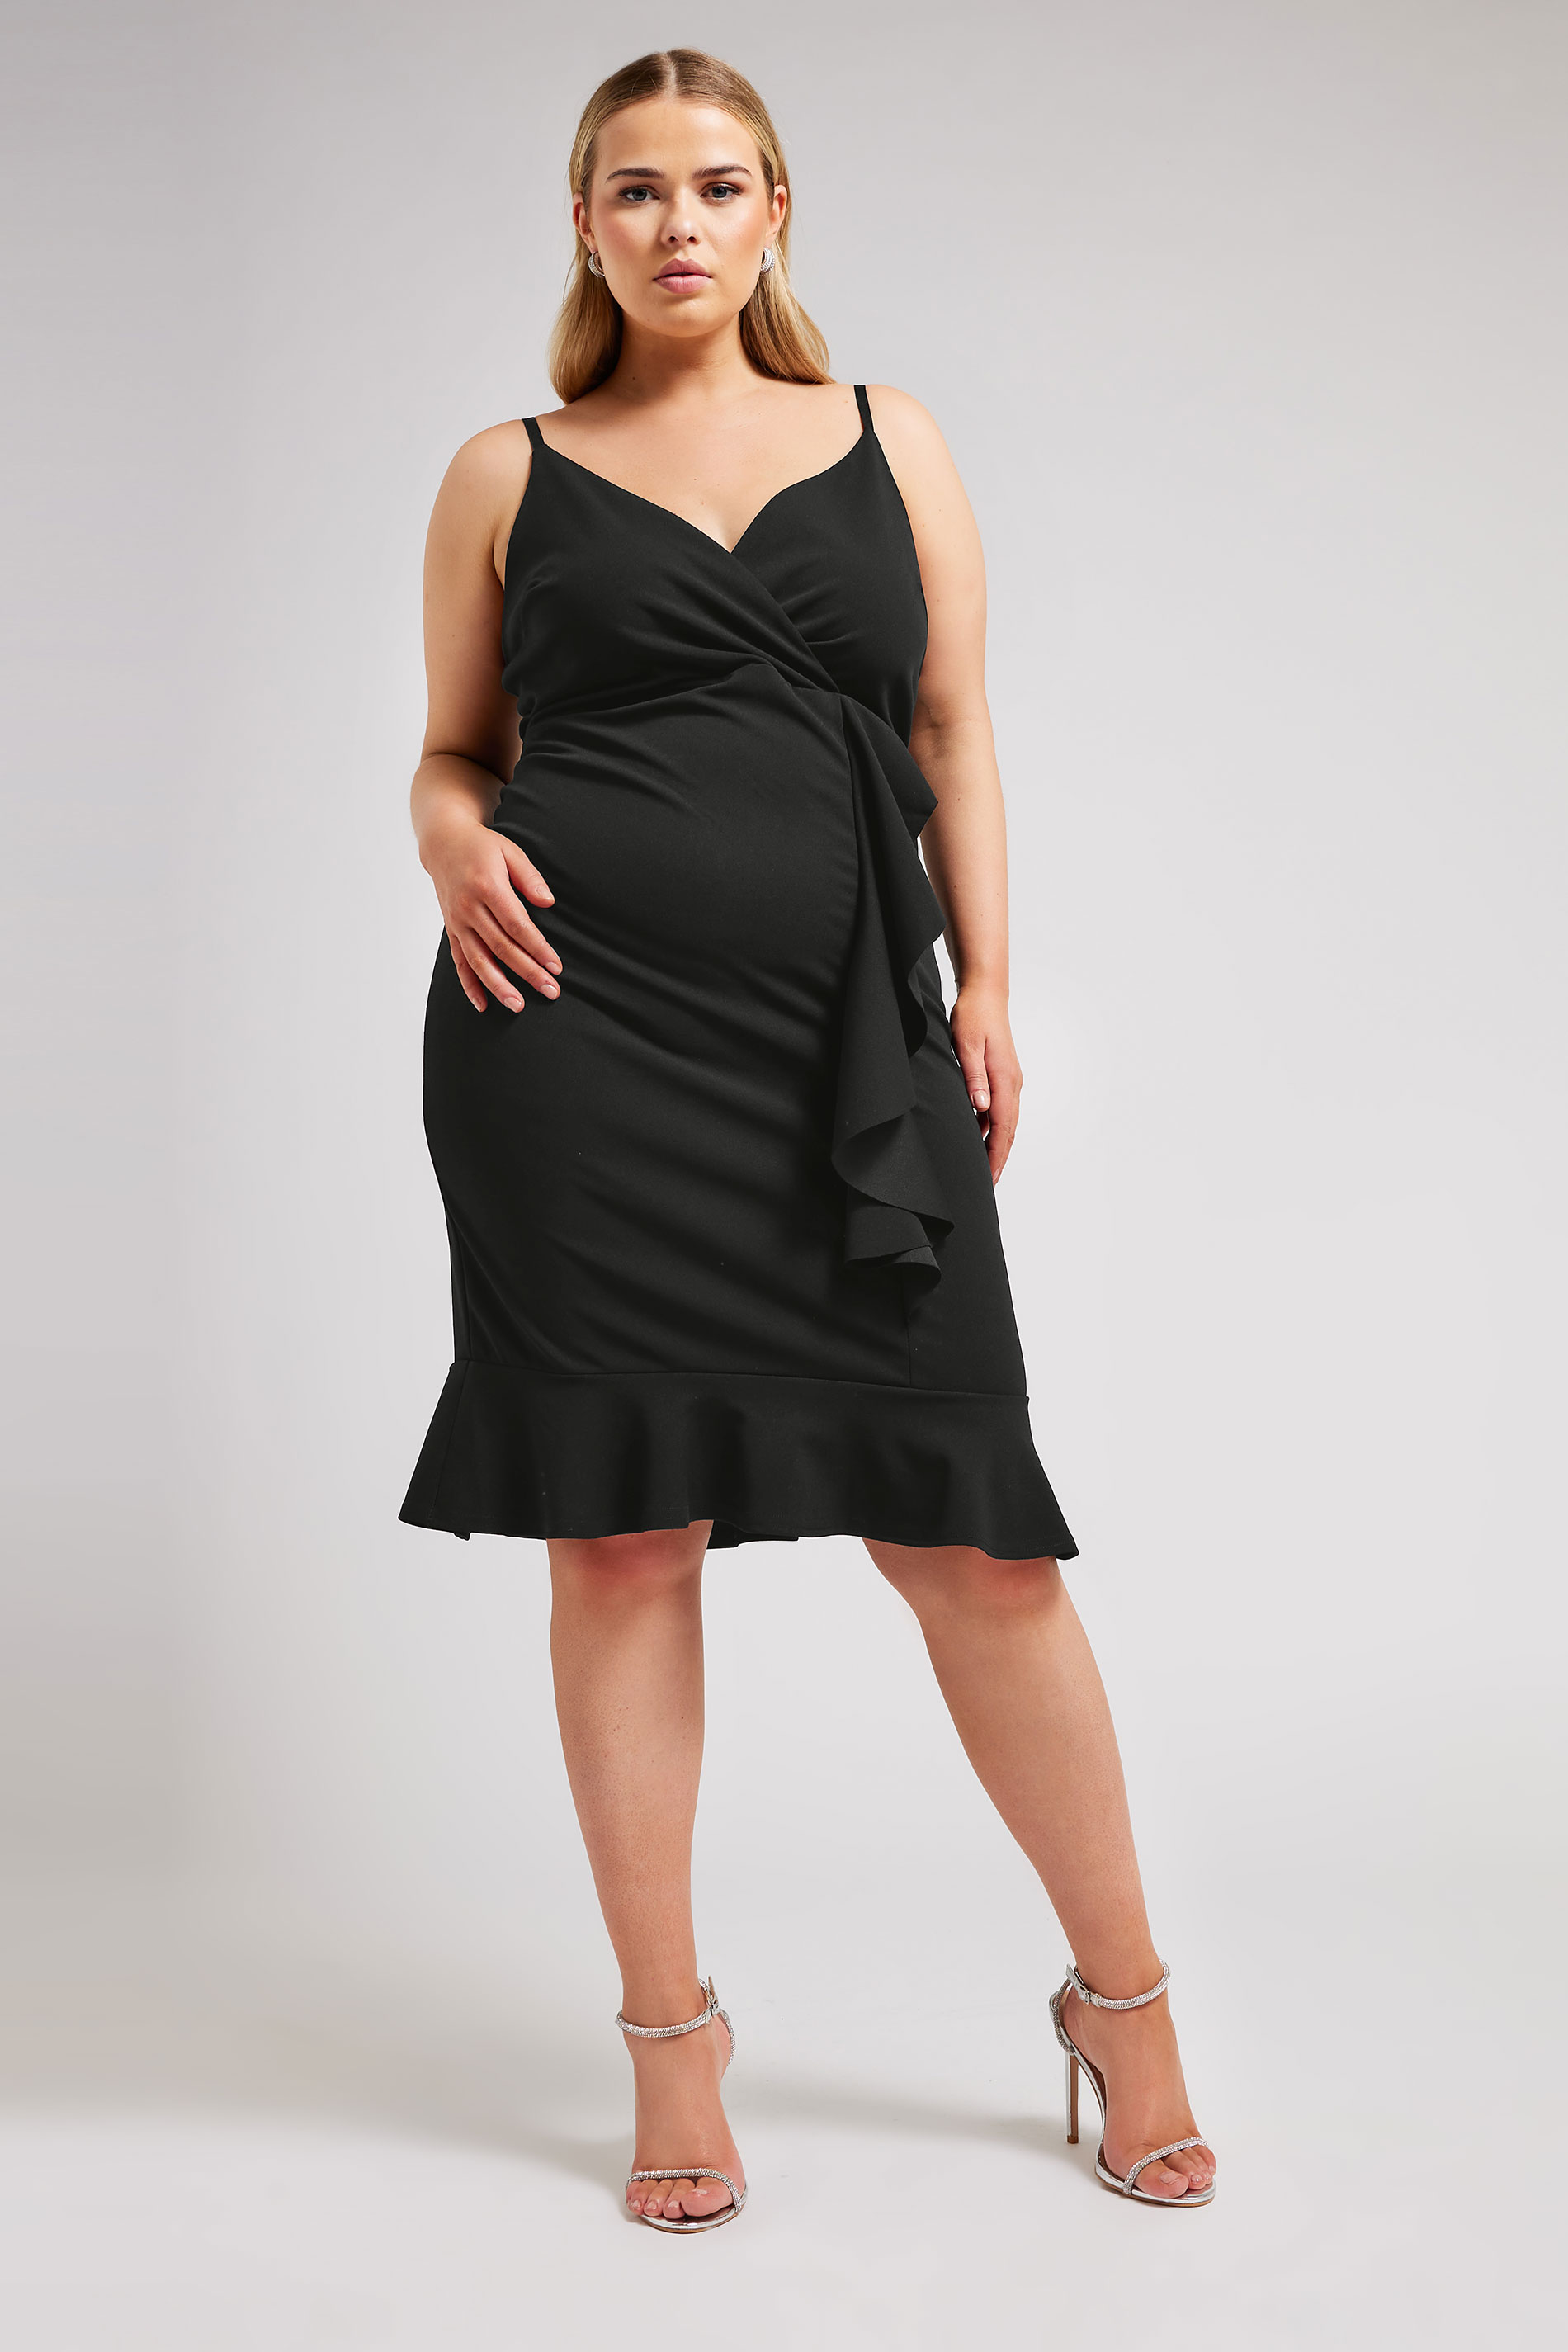 YOURS LONDON Plus Size Black Ruffle Wrap Dress | Yours Clothing 3